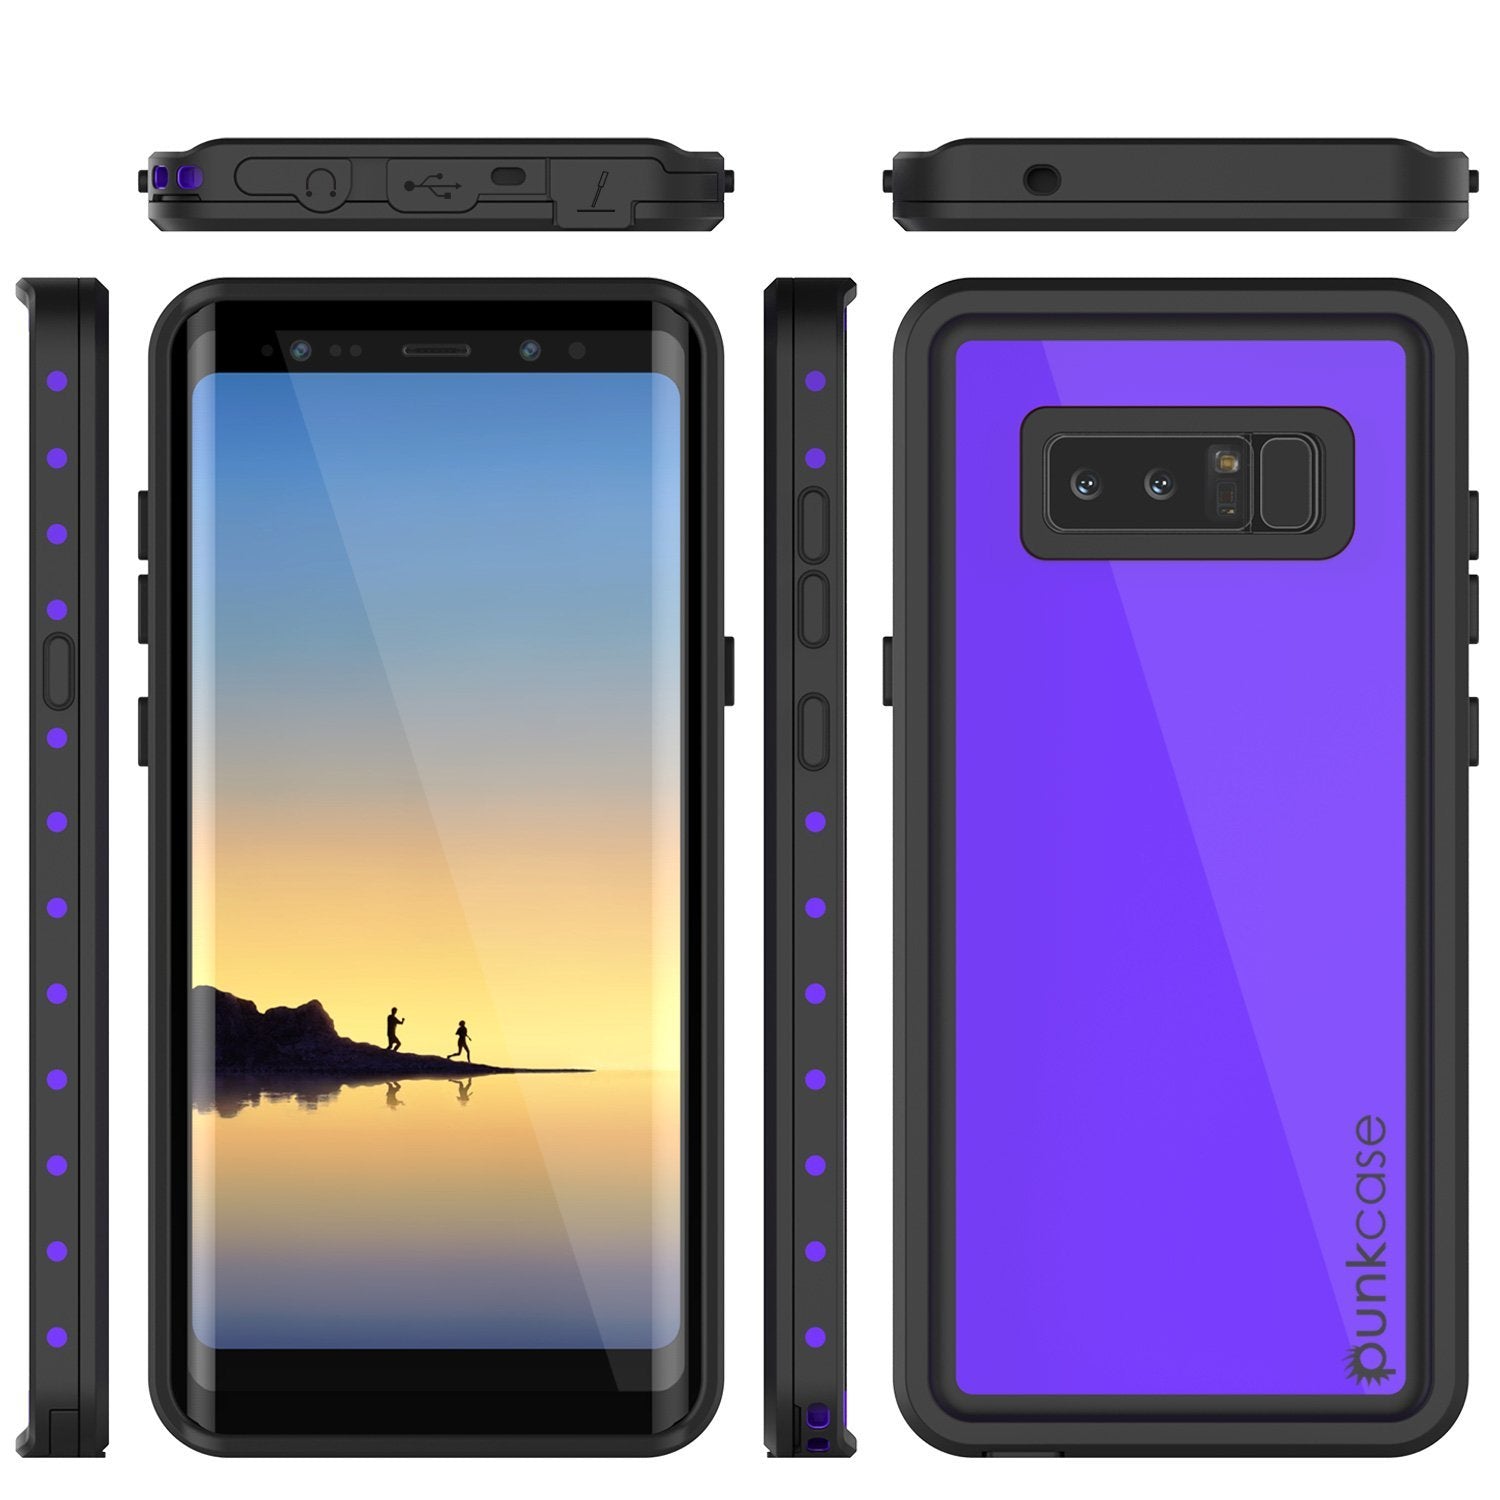 Galaxy Note 8 Waterproof case, StudStar Series Armor Cover [PURPLE]